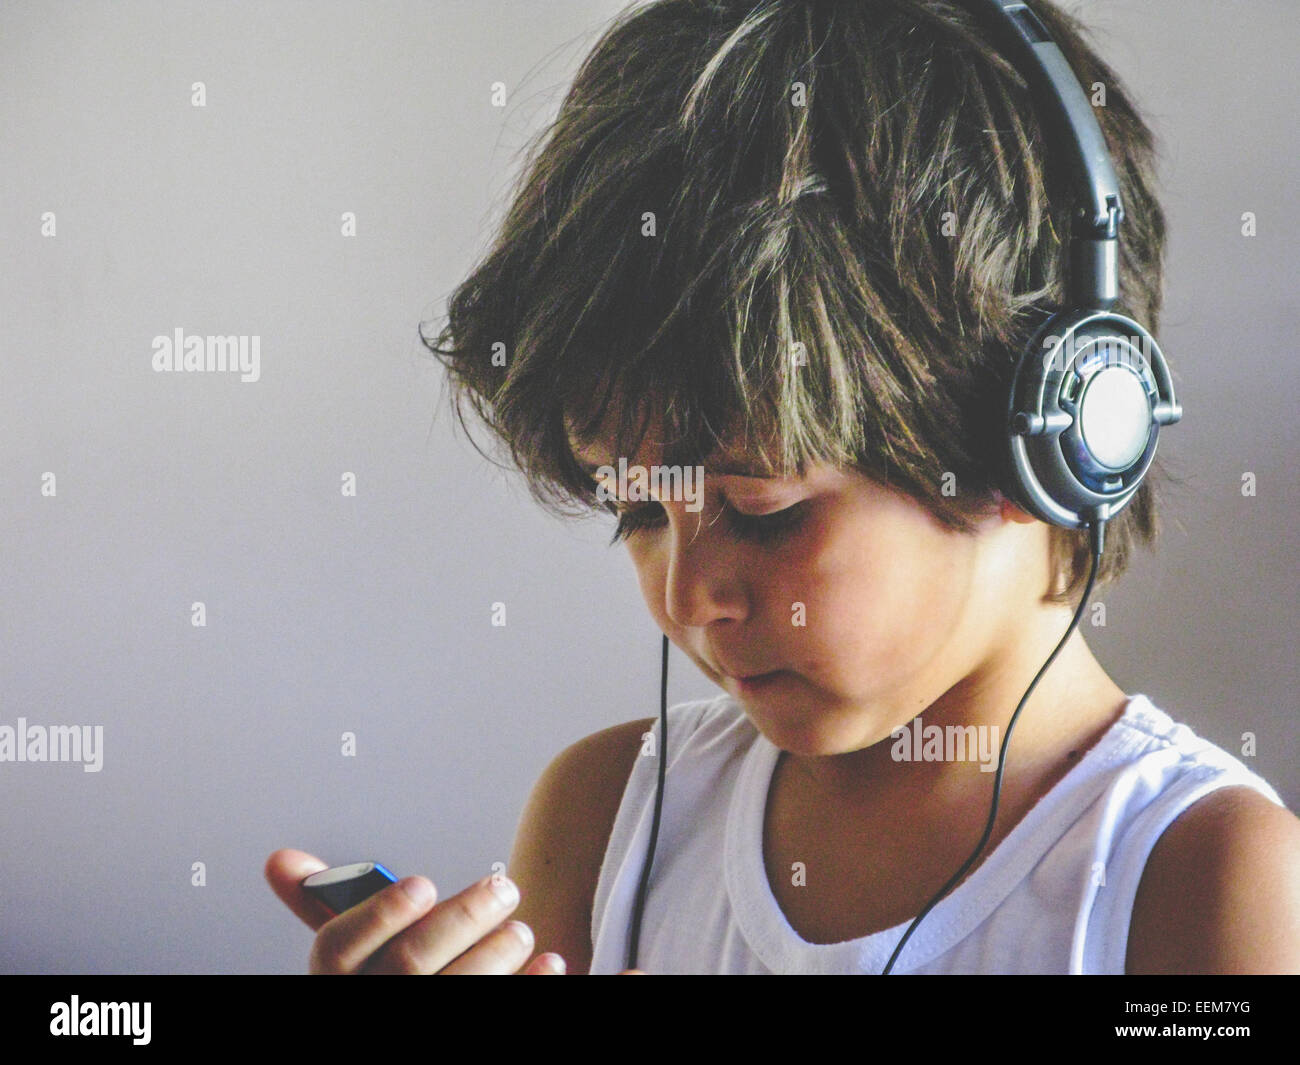 Boy wearing headphones listening to music Stock Photo